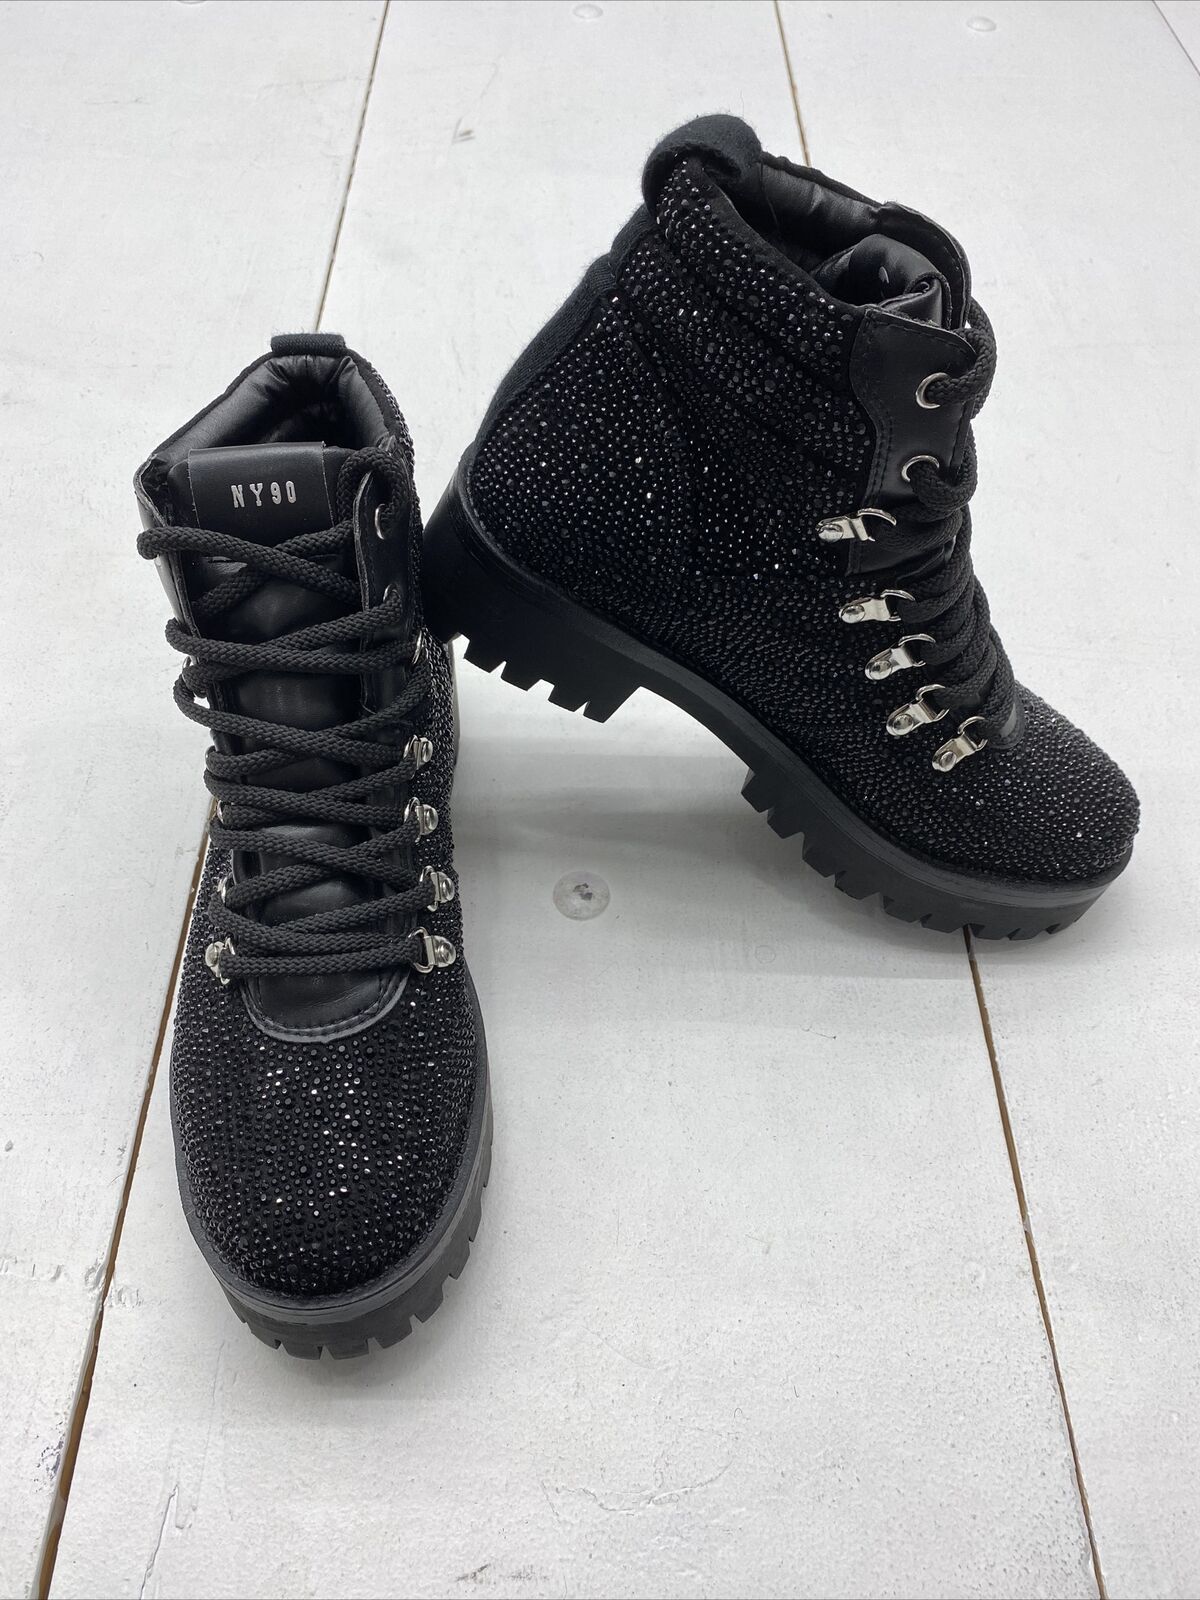 Steve Madden Buzzer Black Jeweled￼ Boots Women’s Size 9 New*